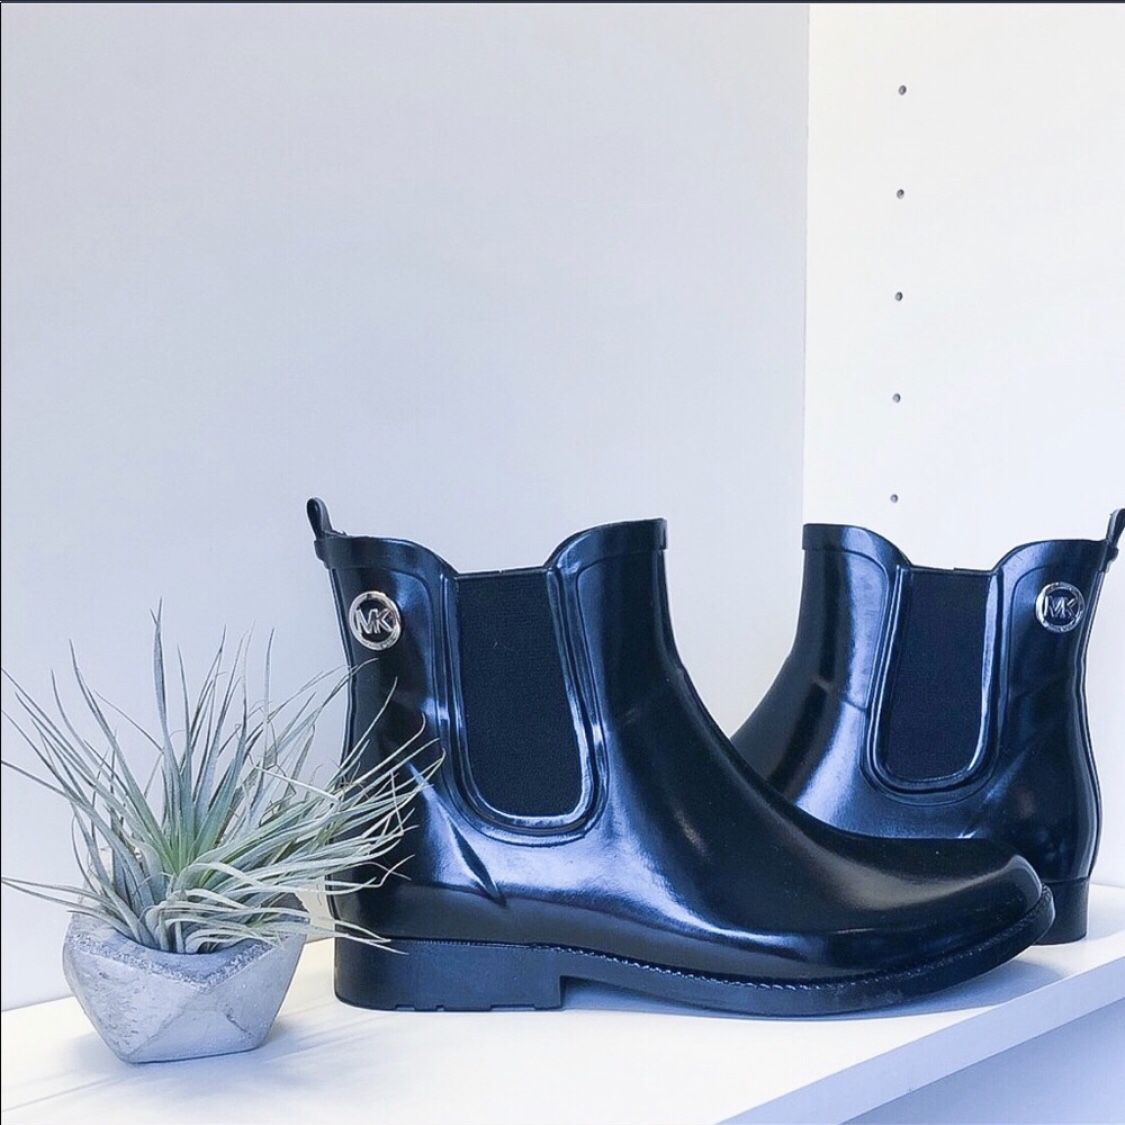 Michael Kors New Chelsea Boots Rain Boots